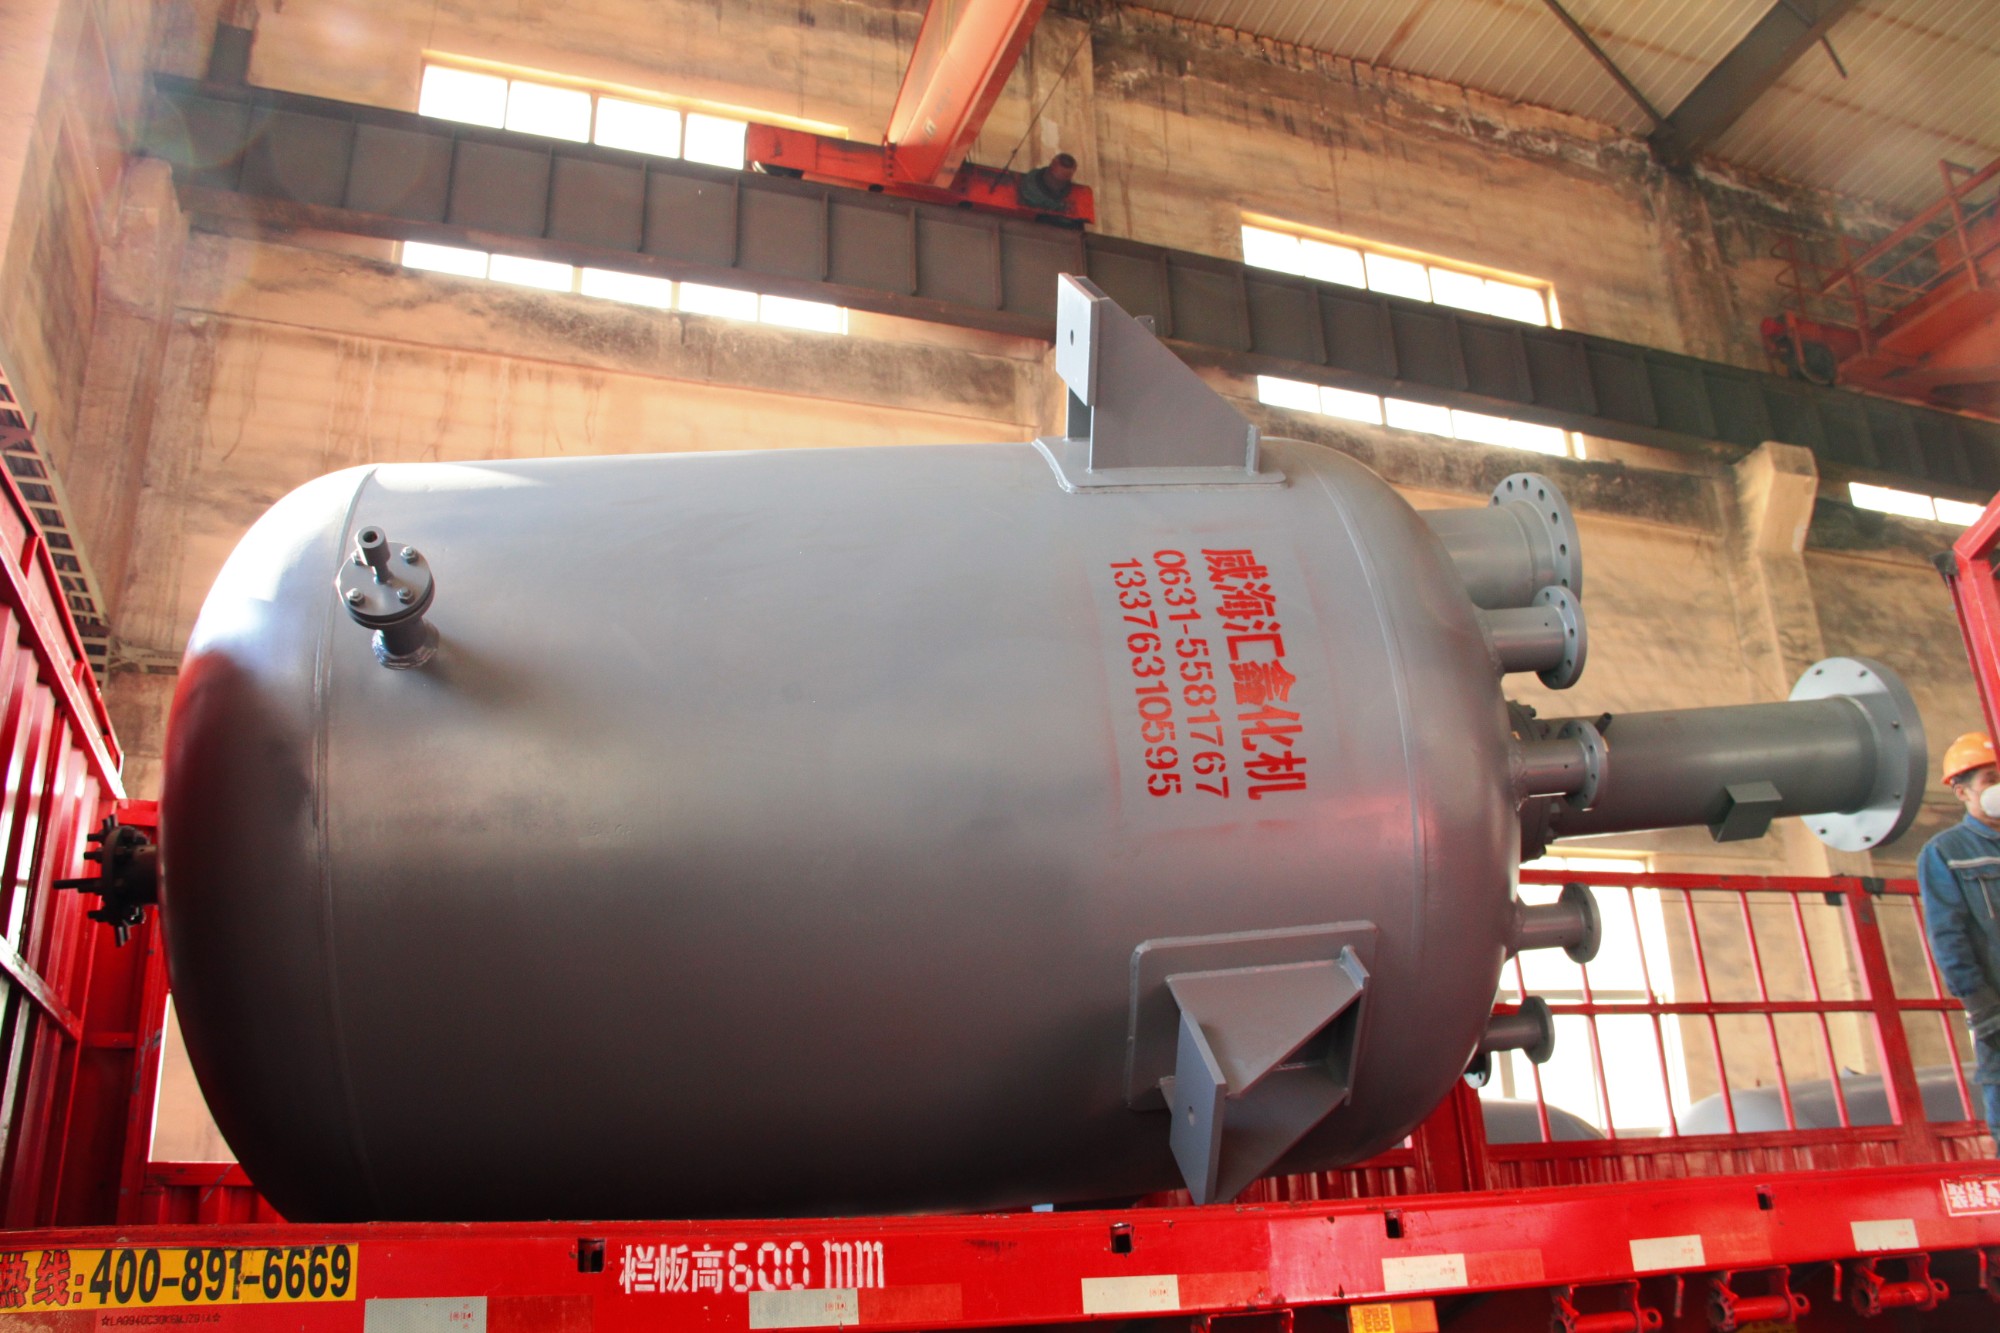 Delivery 6 Sets Alkali melting kettles to Xinjiang customer